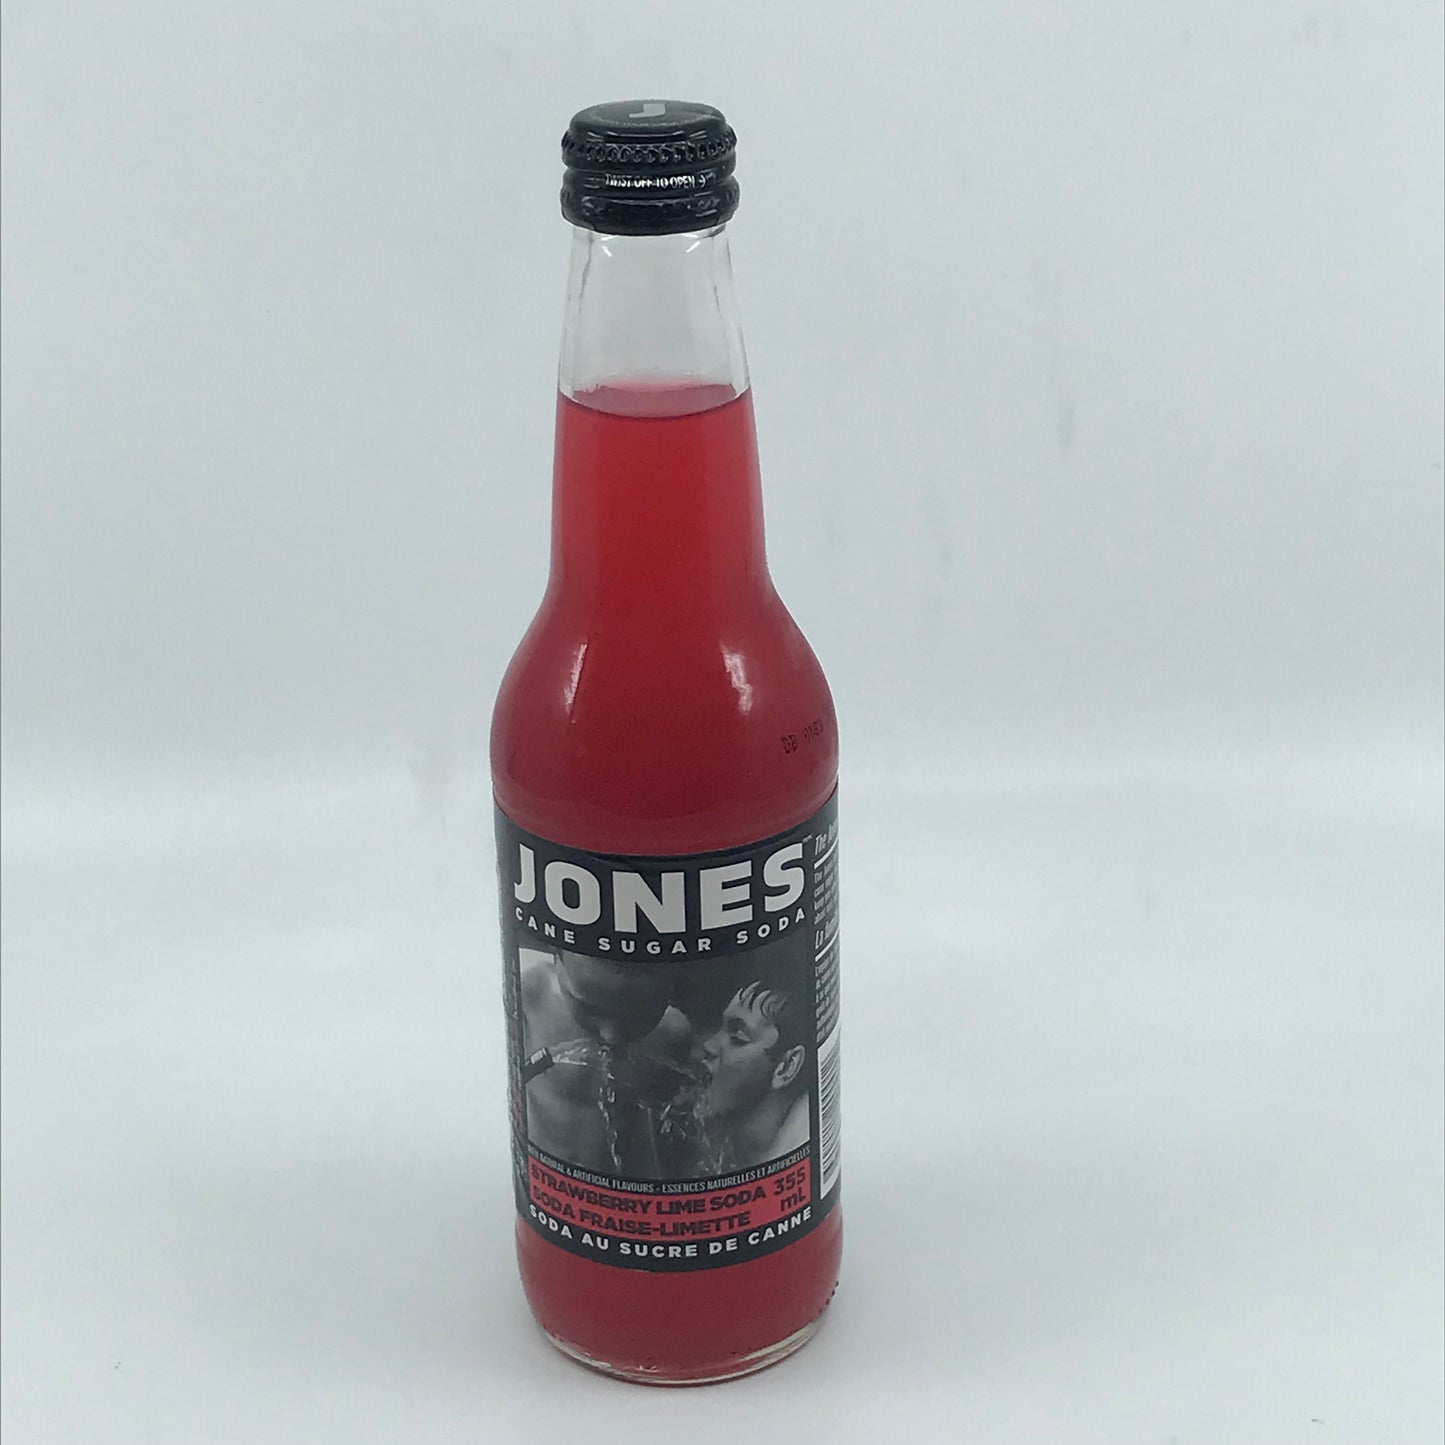 Jones Soda's